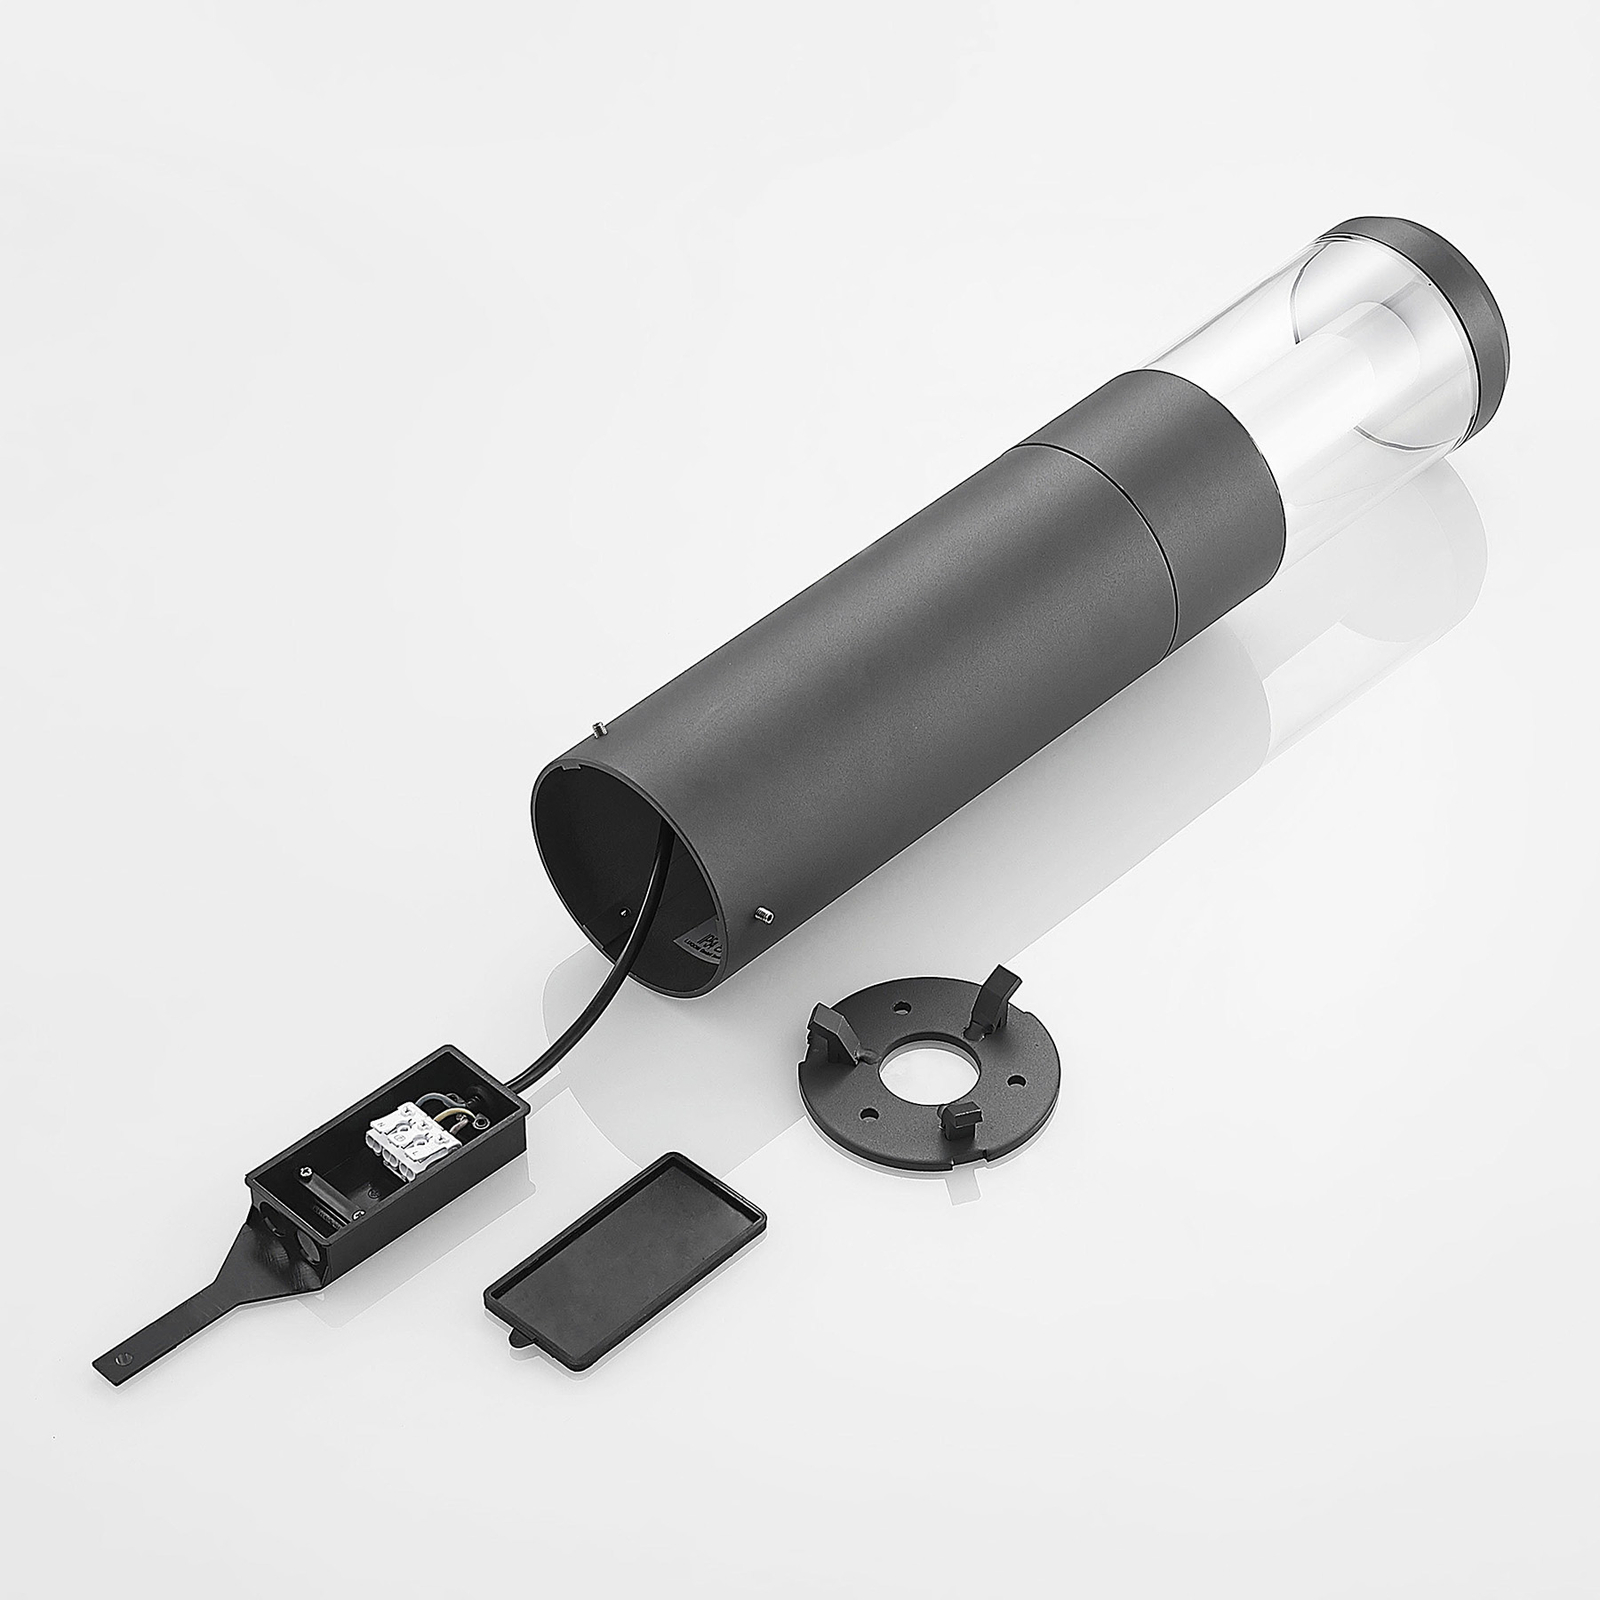 Arcchio Dakari LED-Sockelleuchte, smart steuerbar